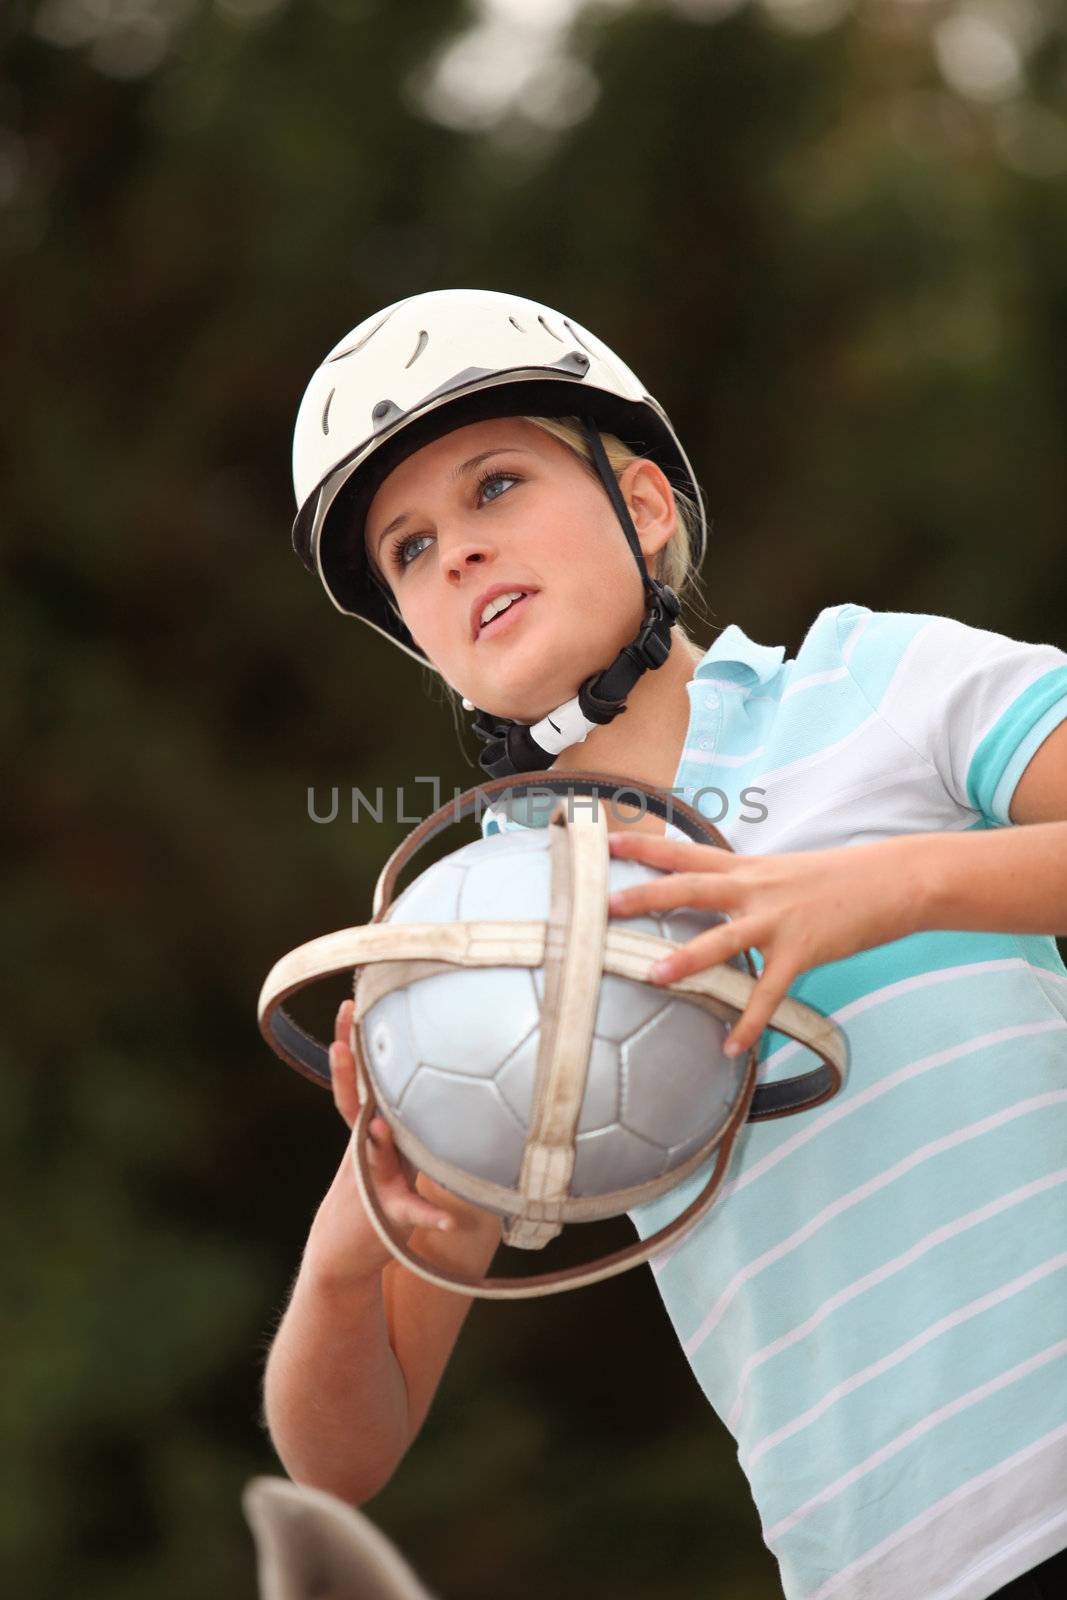 Girl playing Horseball by phovoir